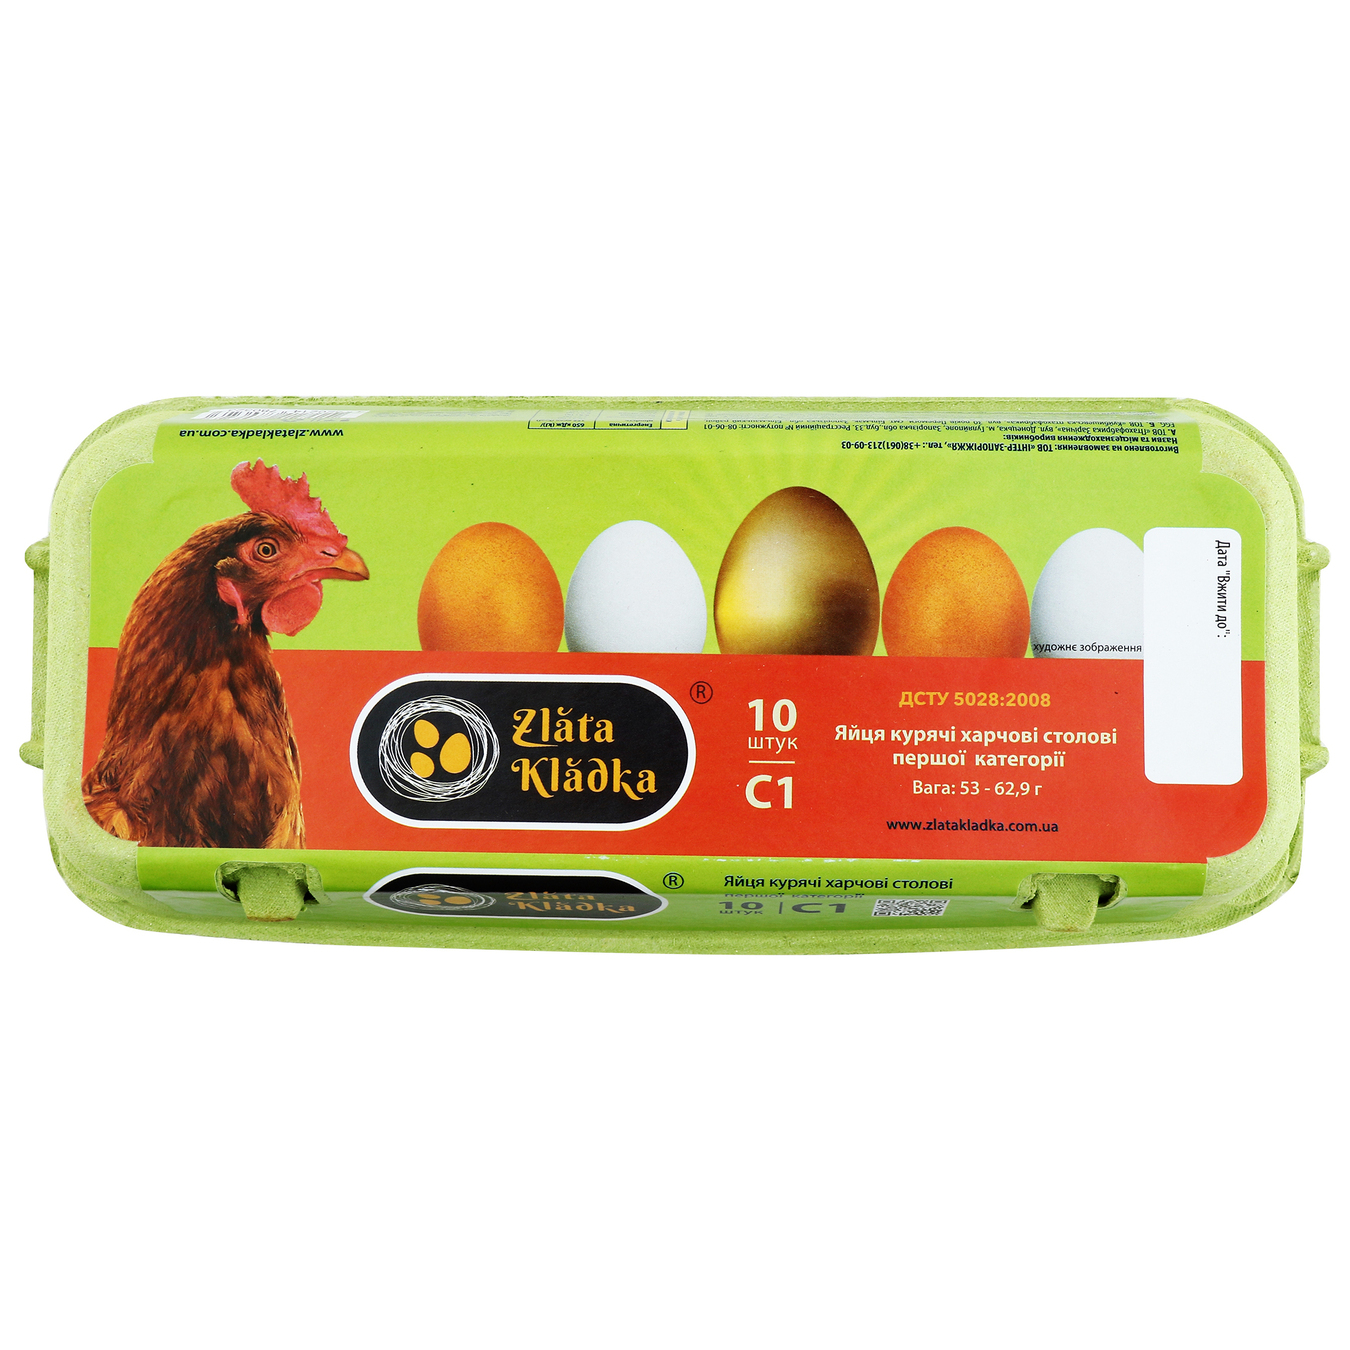 Zlata Kladka chicken eggs C1 10 pcs